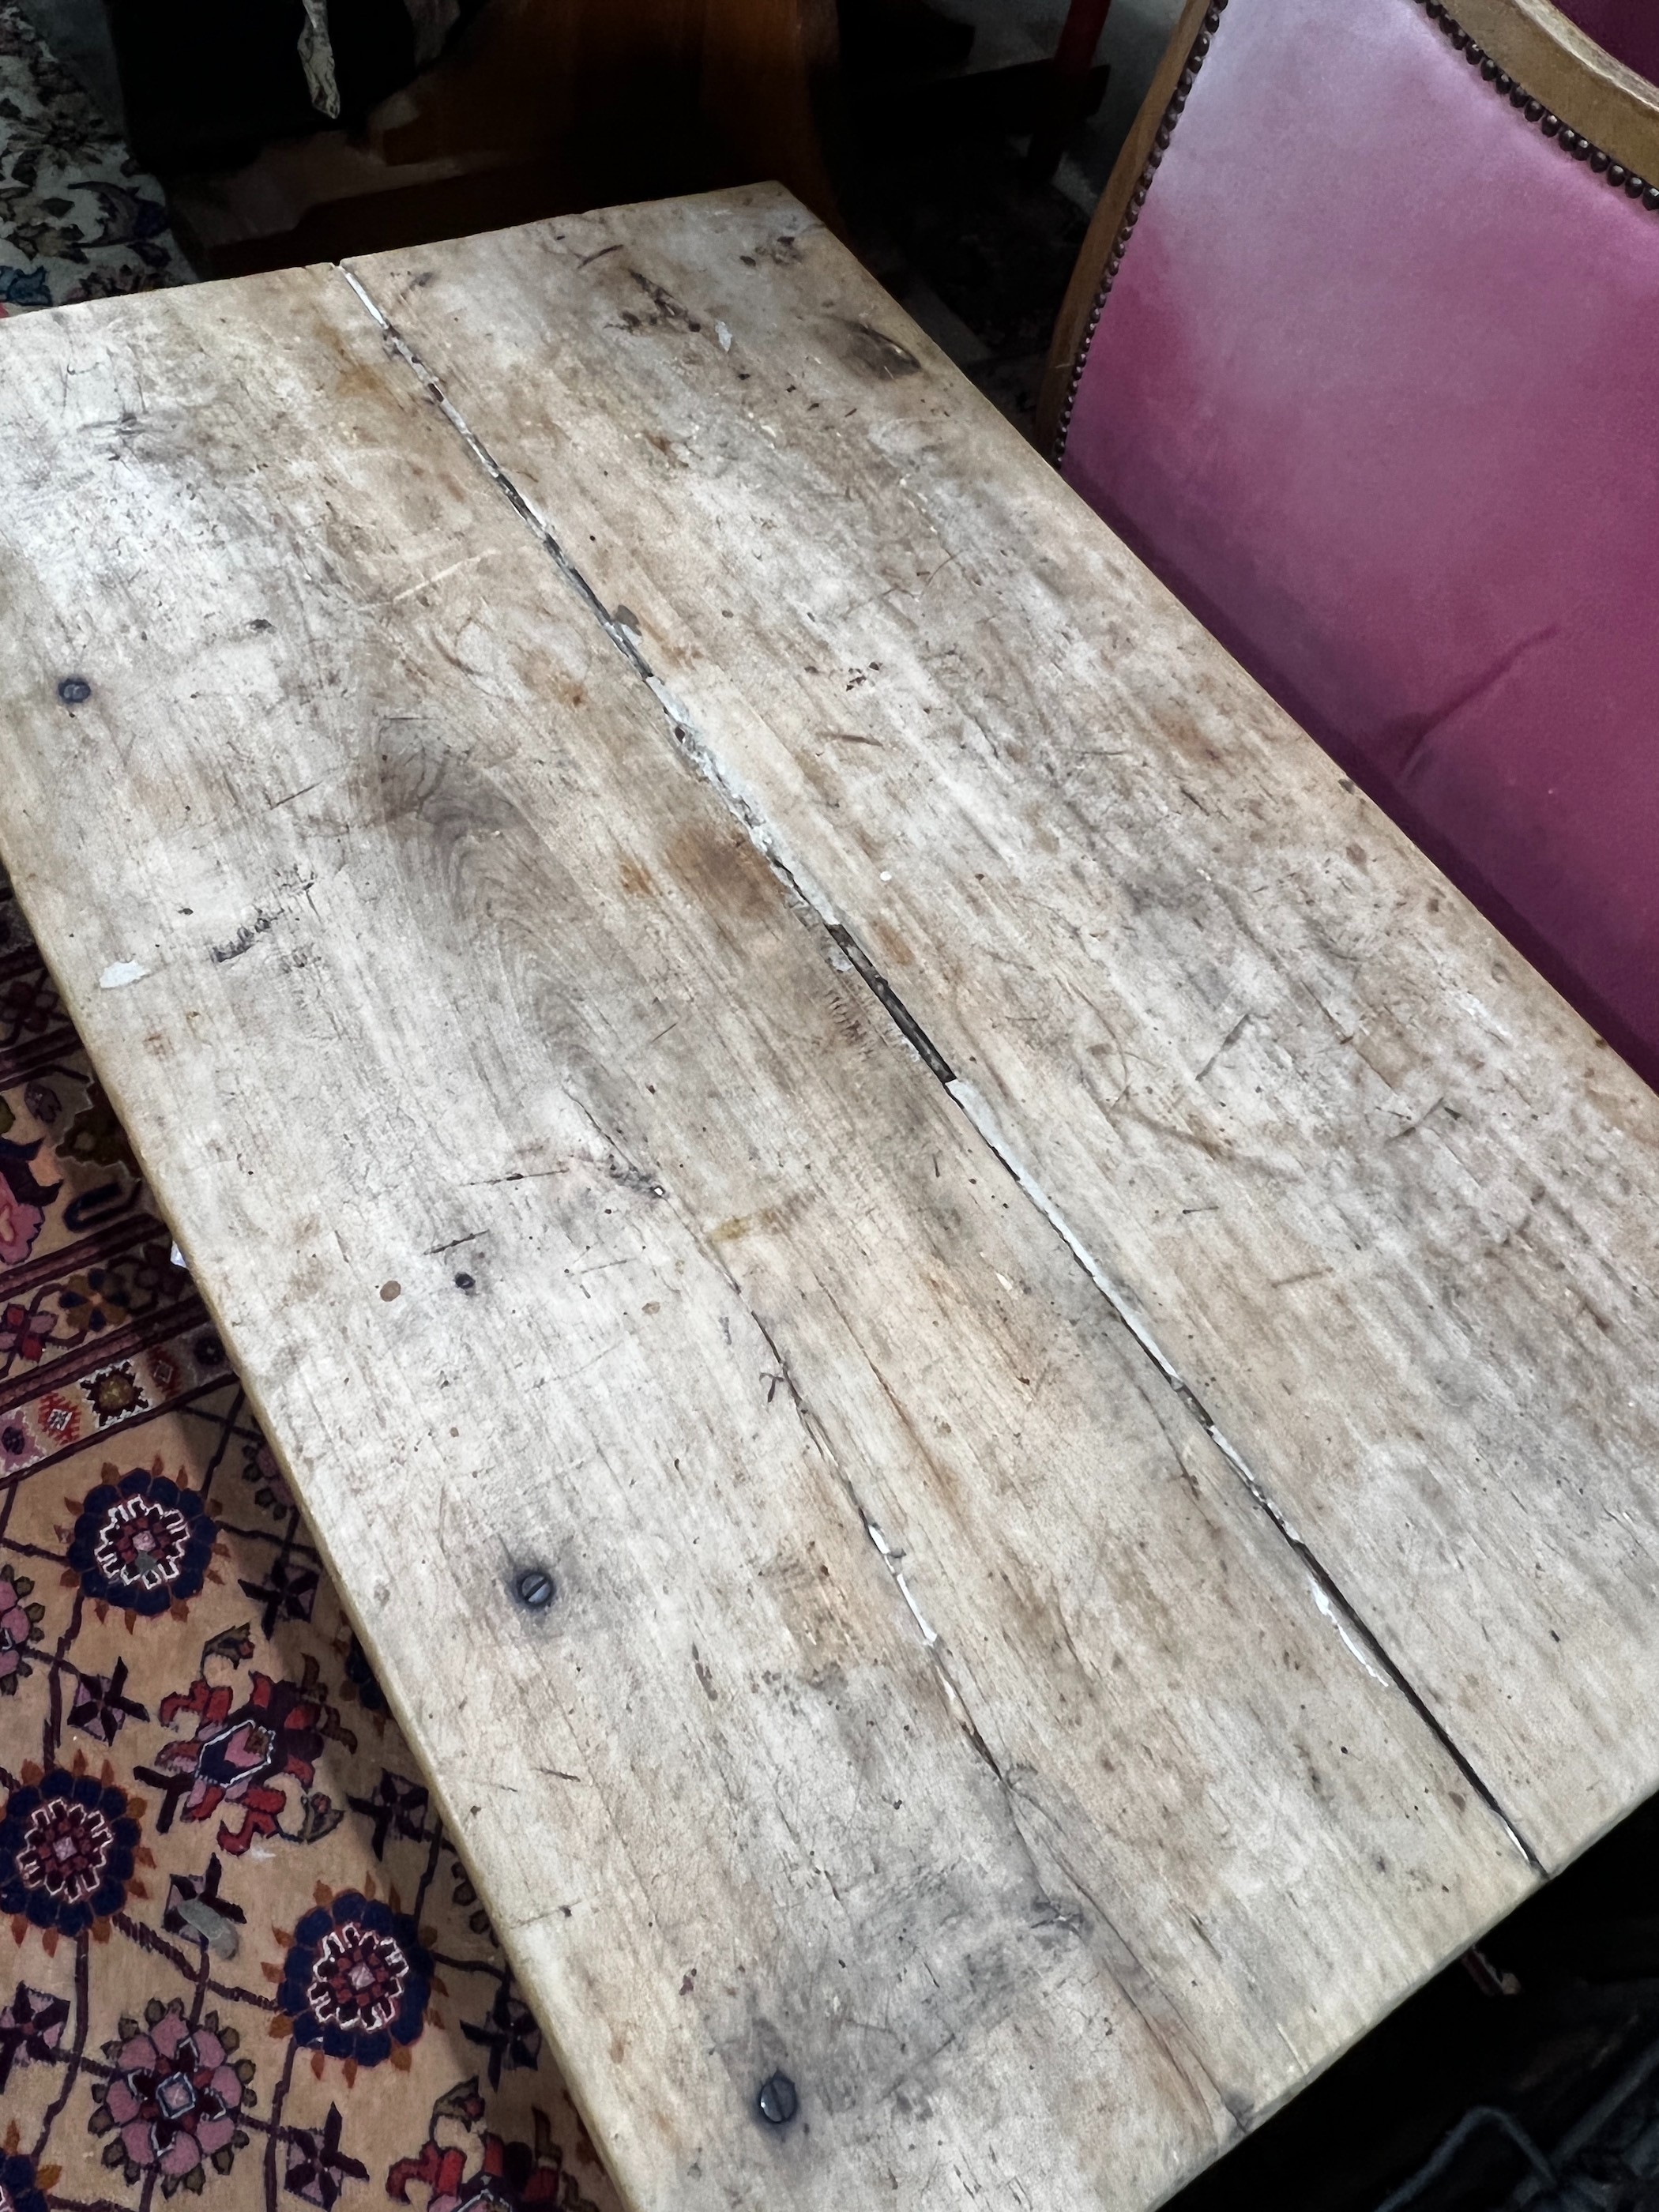 A rectangular provincial pine and oak coffee table, width 120cm, depth 74cm, height 39cm